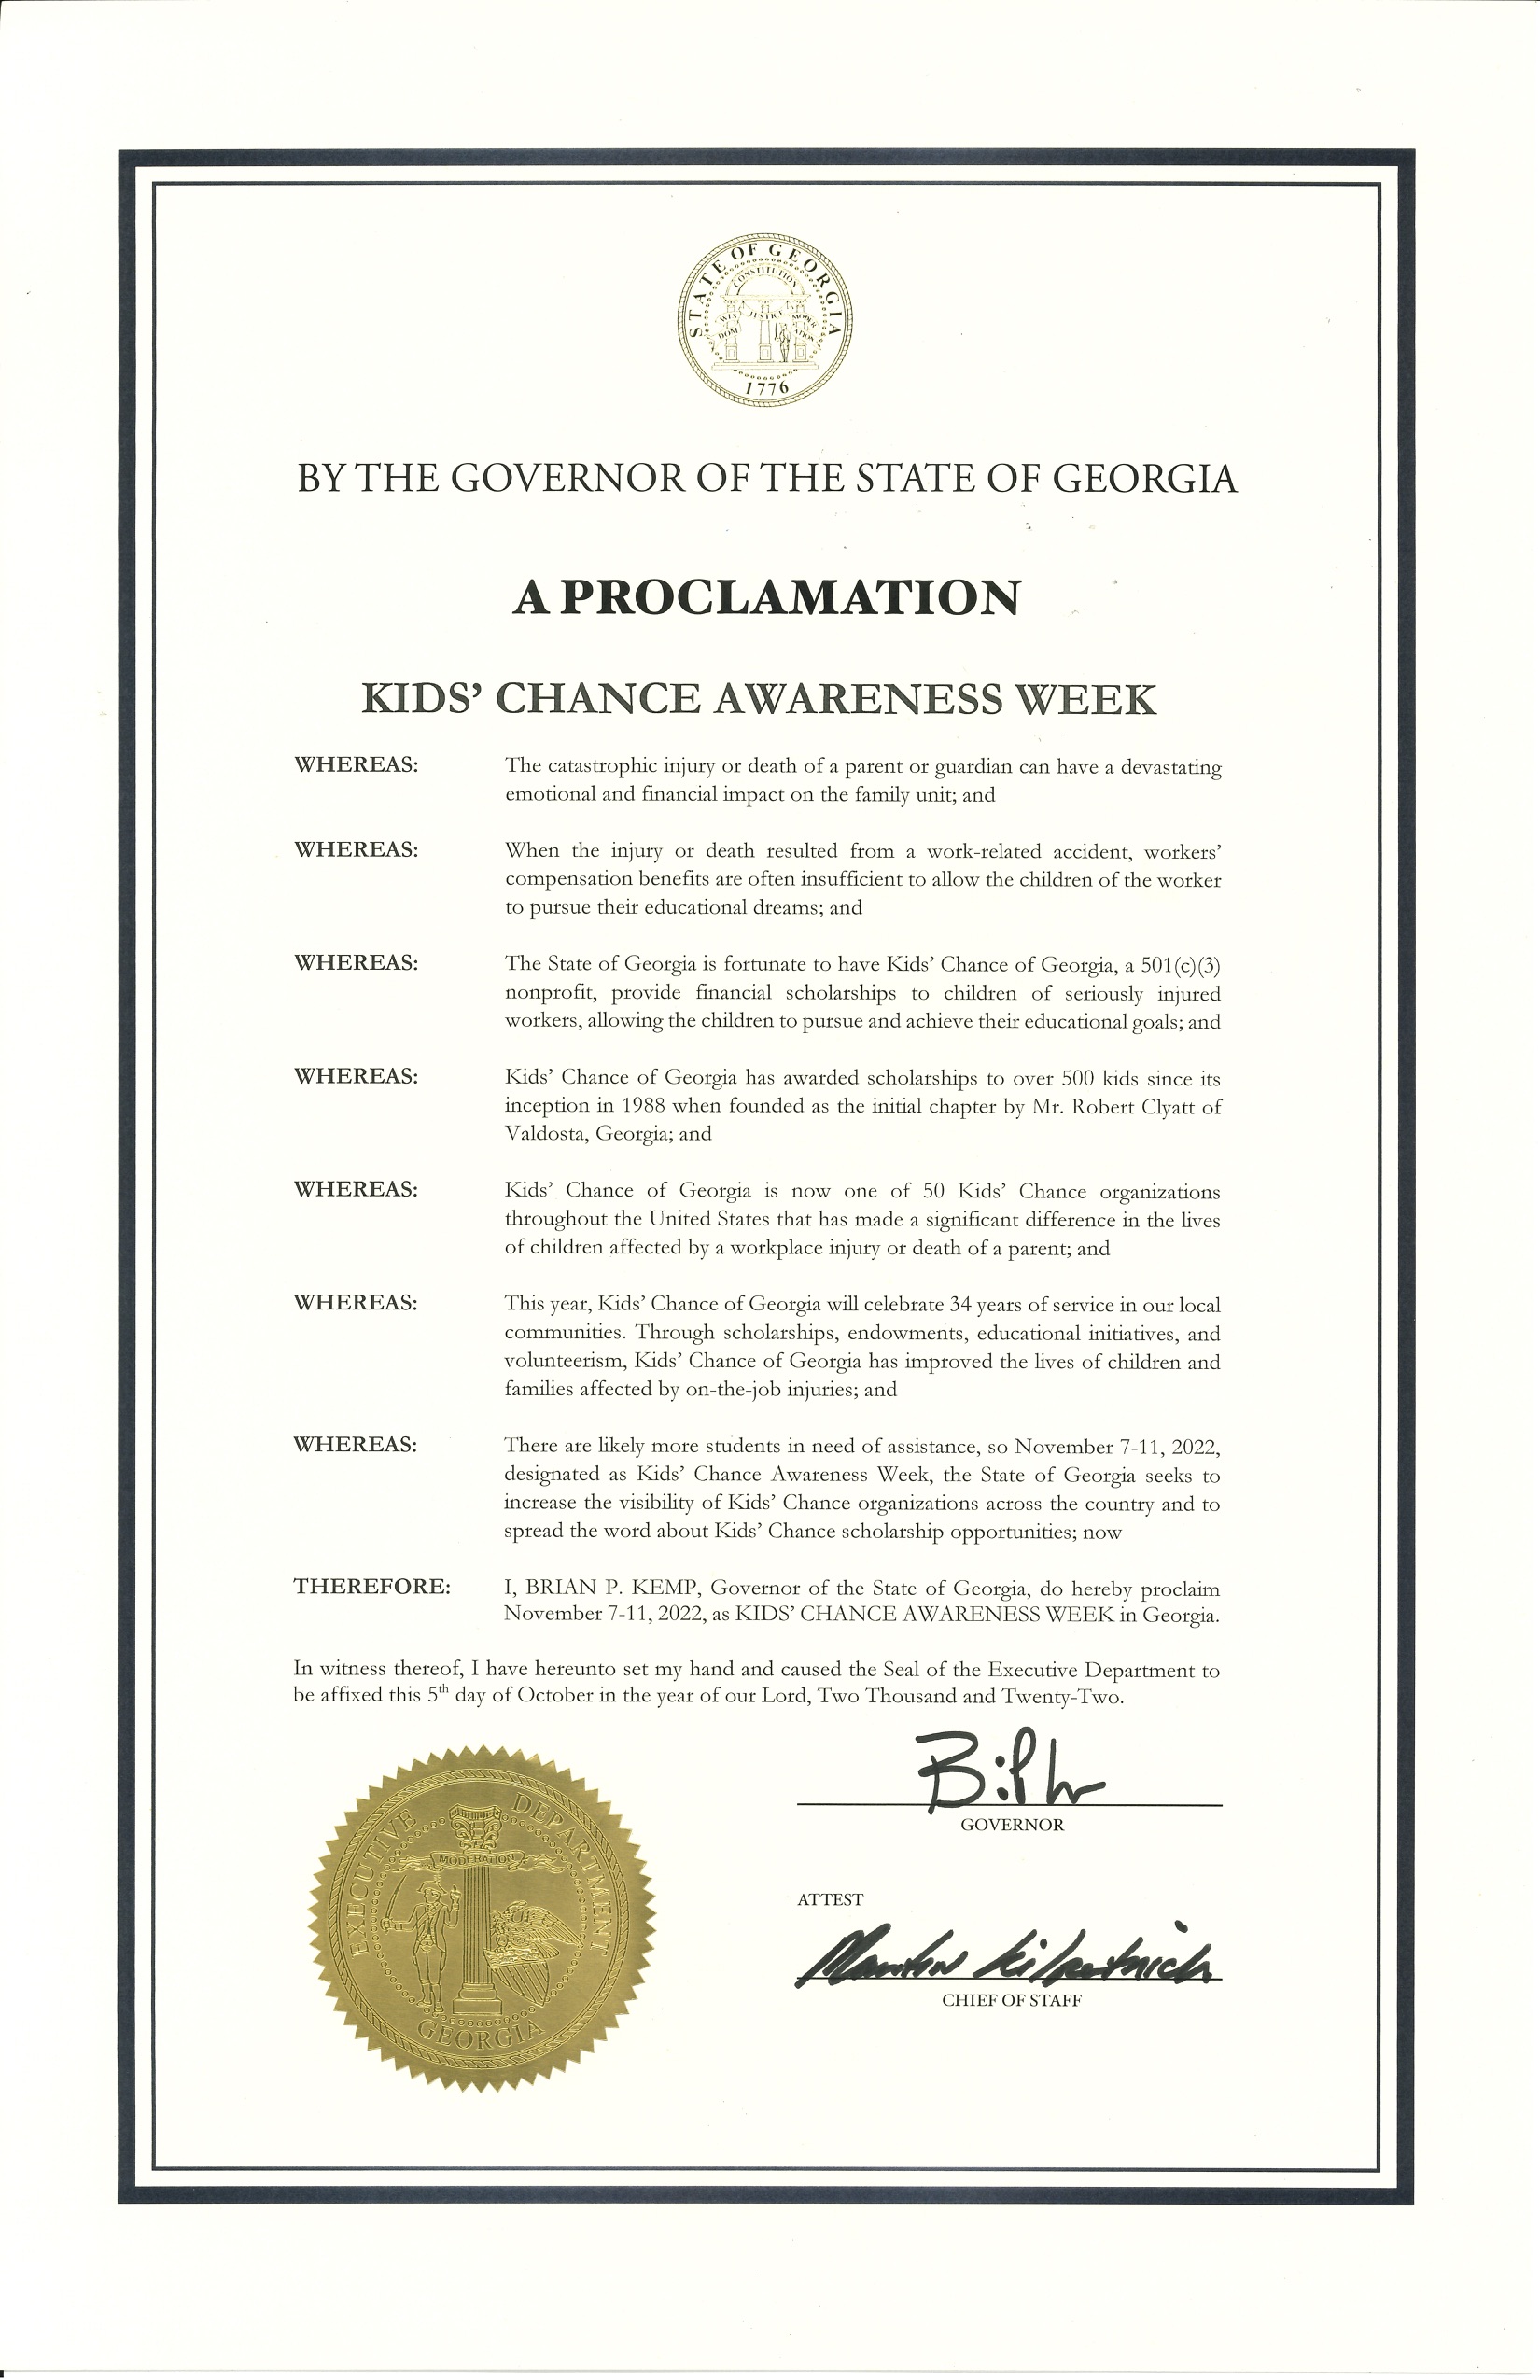 Kids' Chance Awareness Week 11.7-11.22